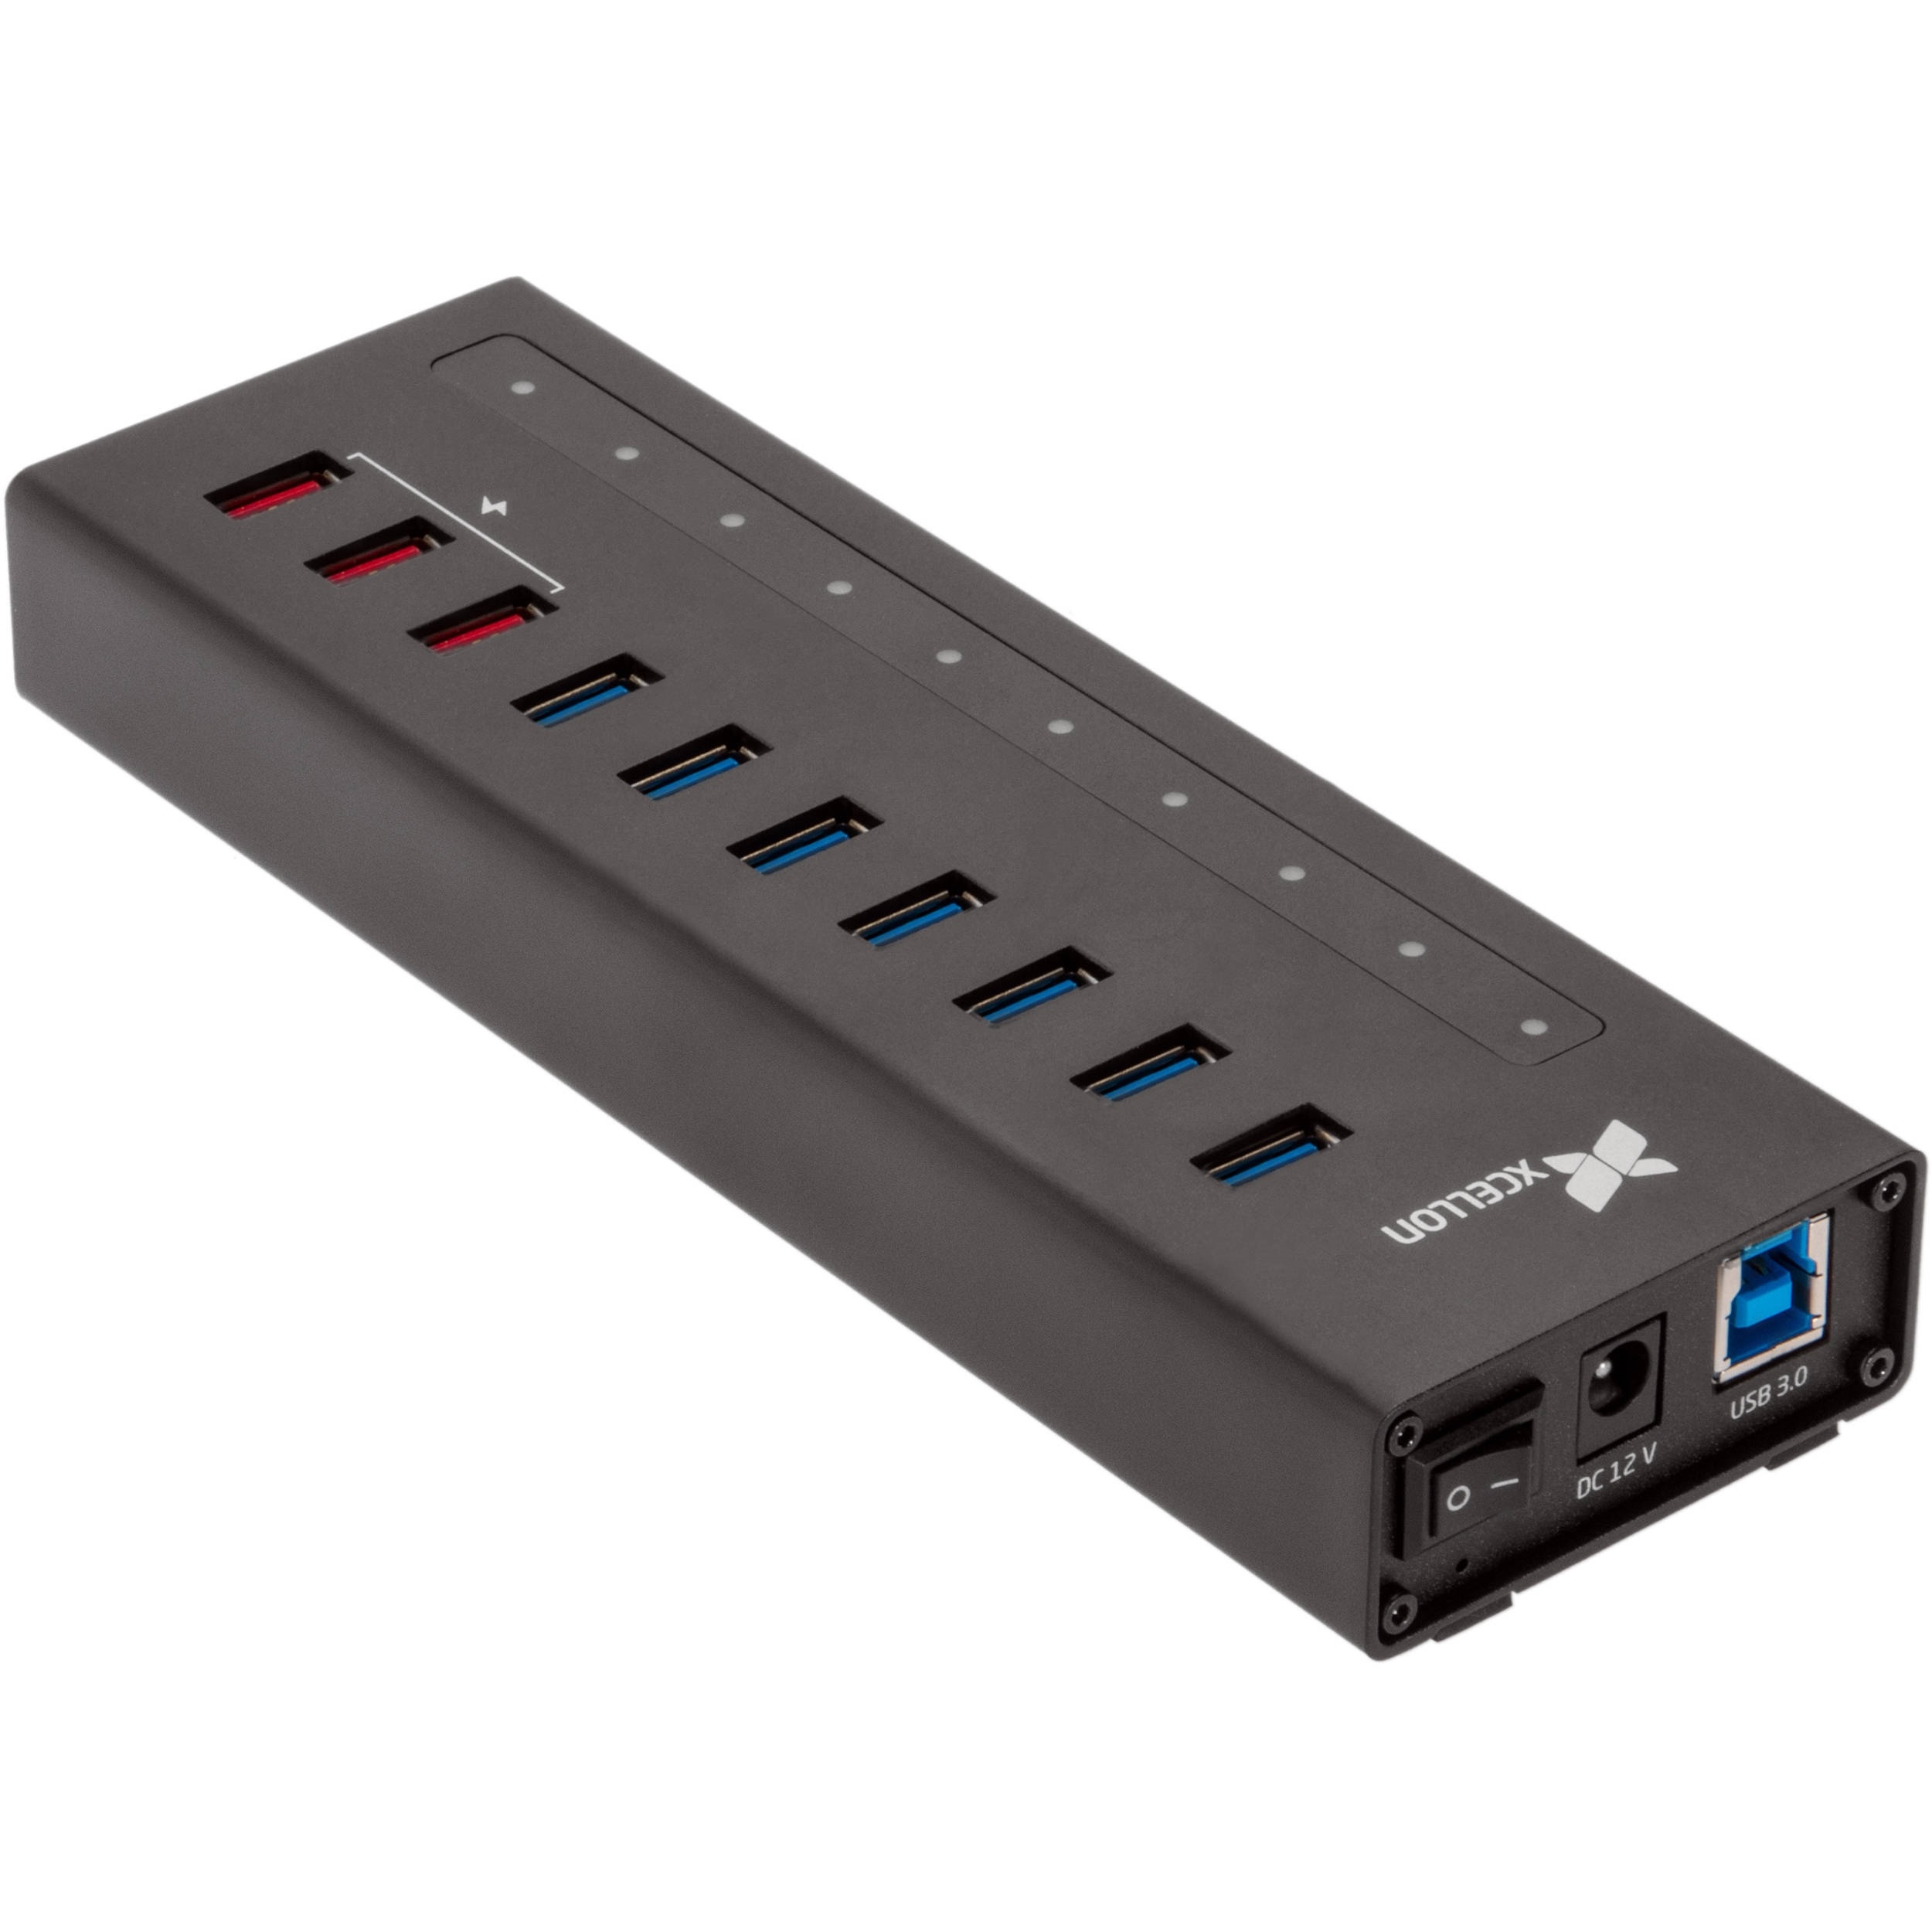 Xcellon 10-Port Powered USB 3.0 Slim Aluminum Hub with 3 Dual Data/Charging Ports